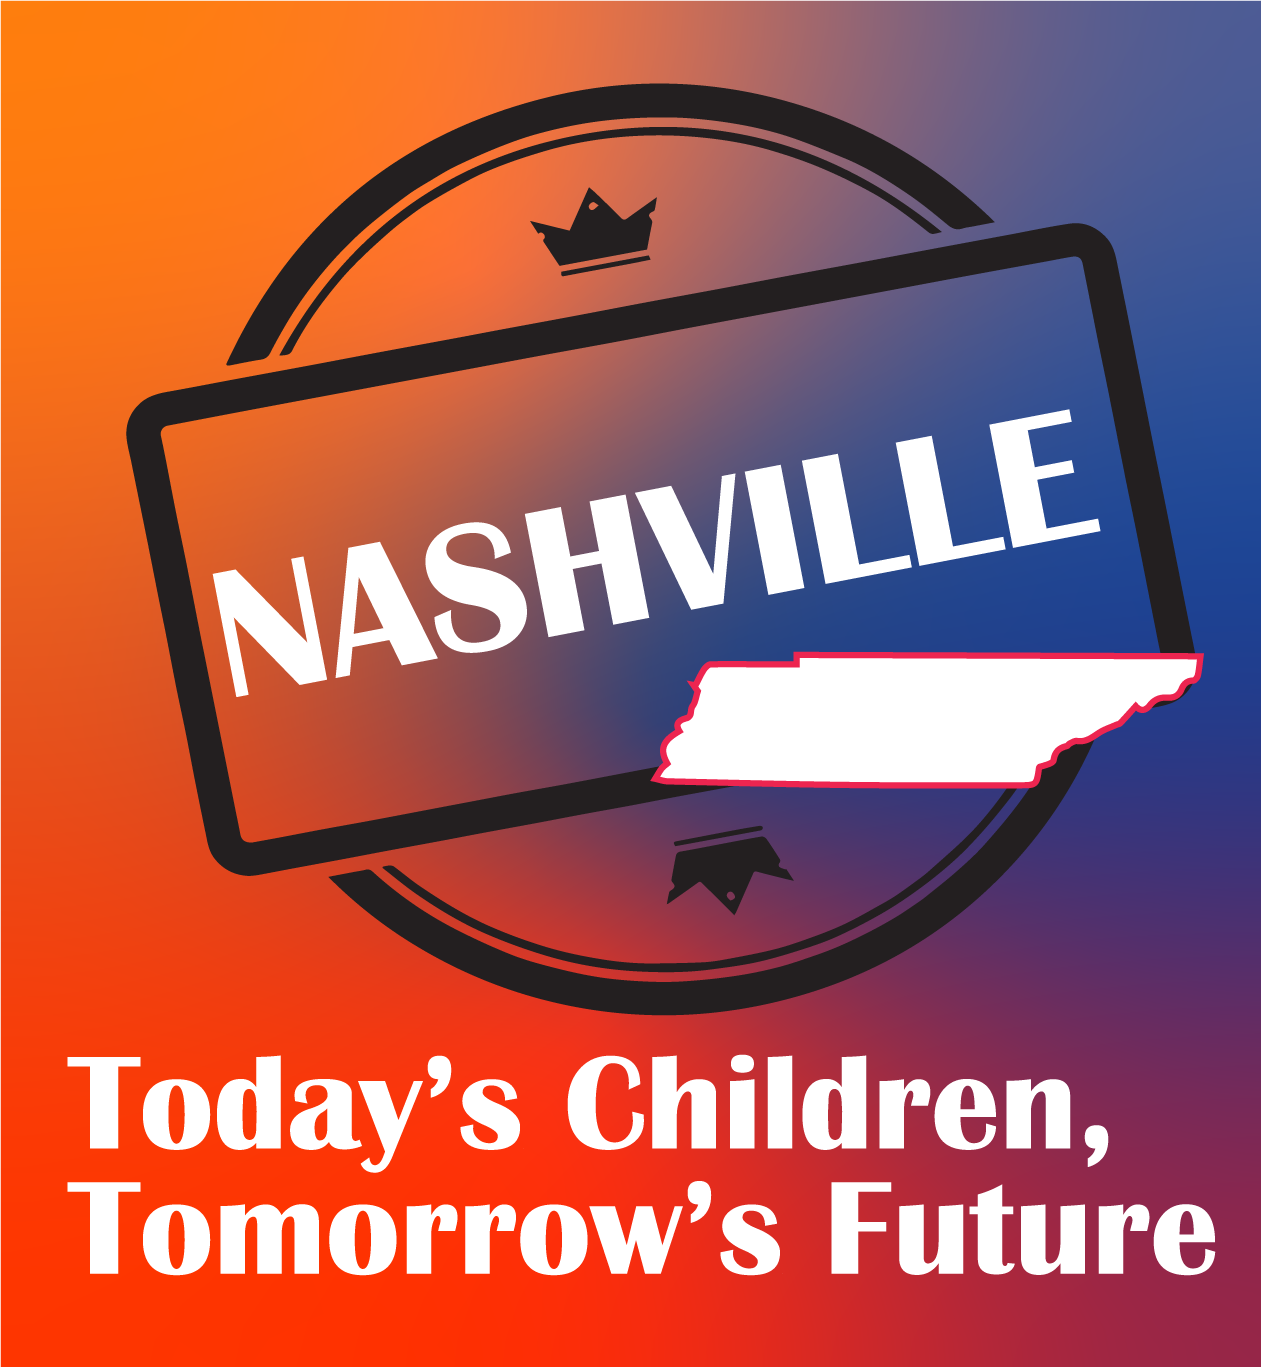 Image for Today's Children Tomorrow's Future - Nashville